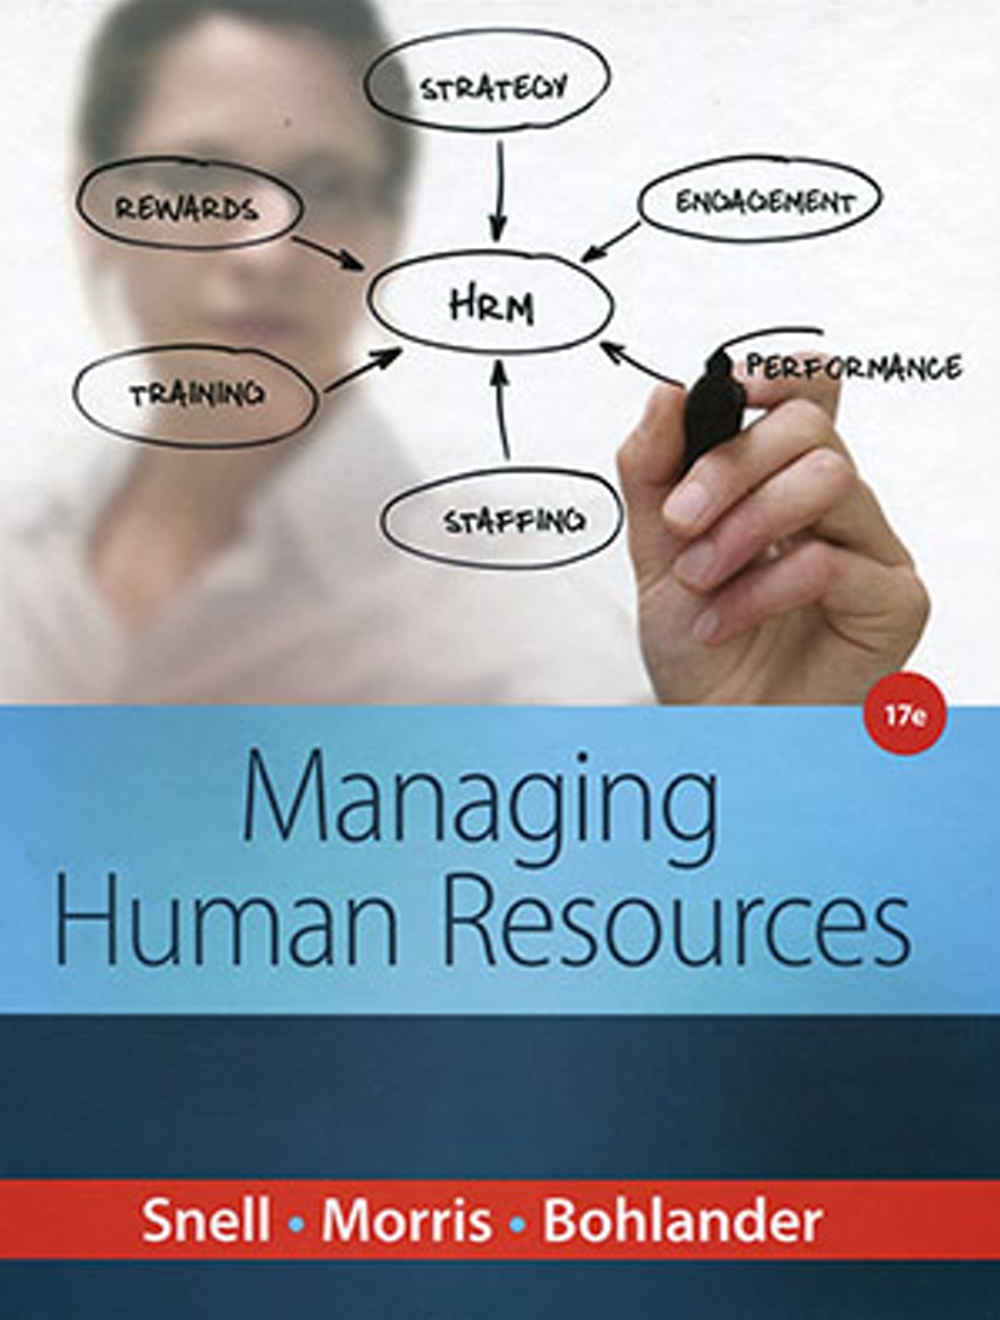 Managing Human Resources(Original)